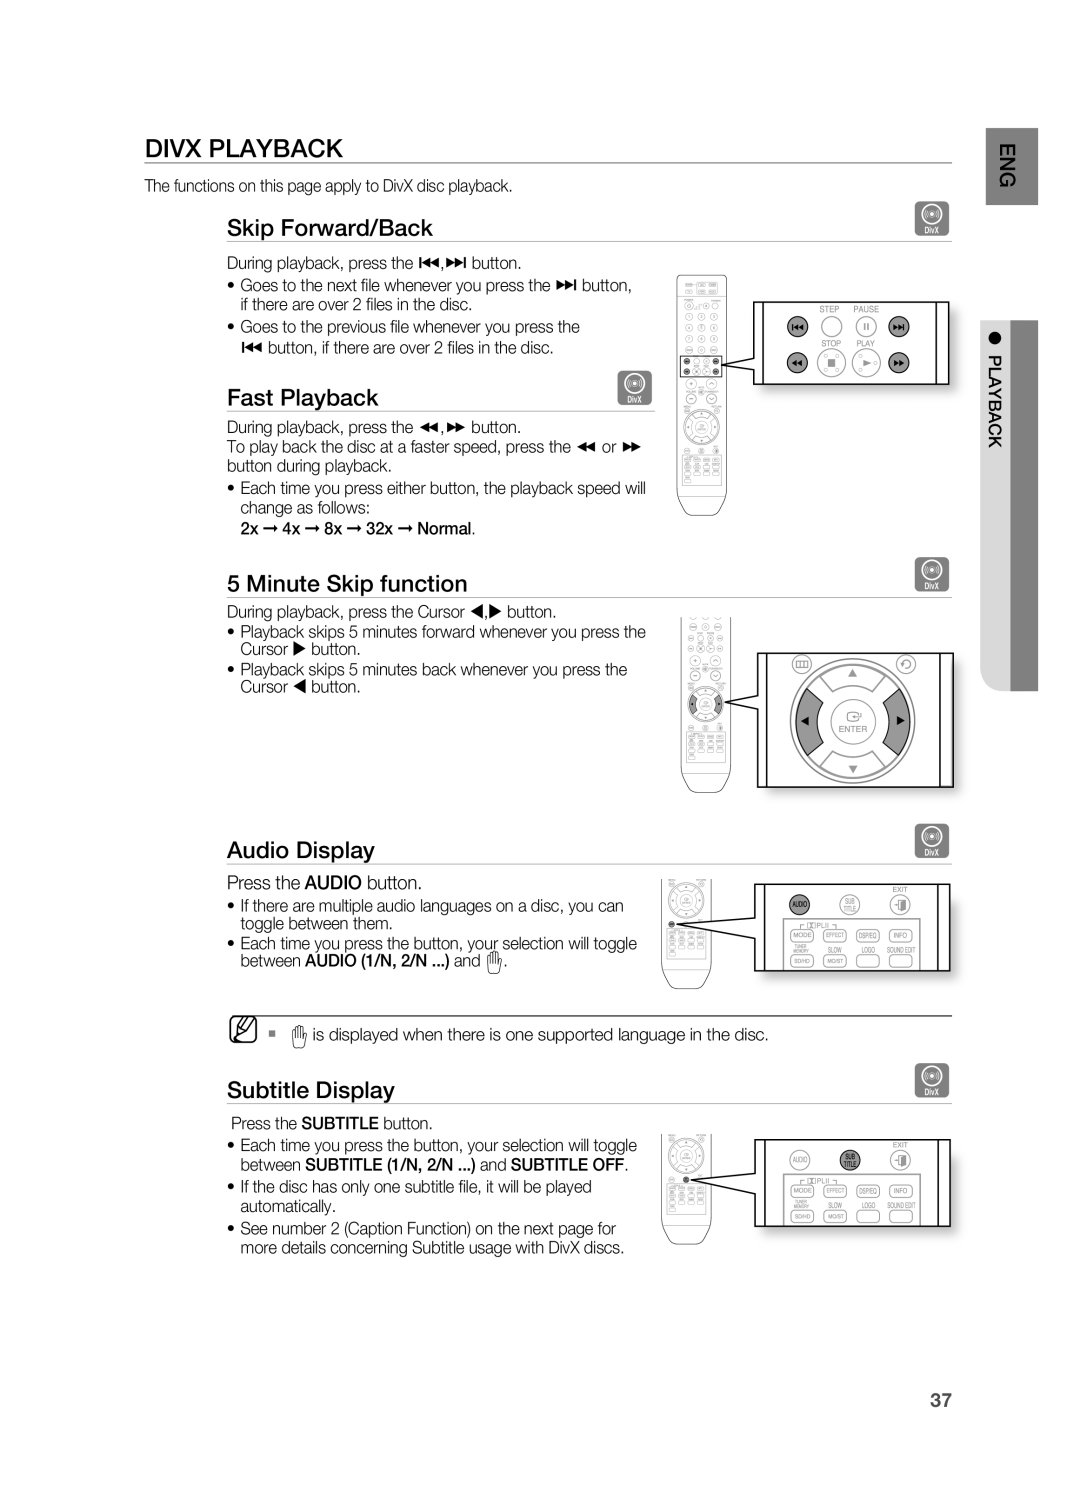 Samsung HT-TWZ315 manual D D D, DiVX PLAyBACK, Skip forward/Back, fast Playback, minute Skip function, Audio Display 